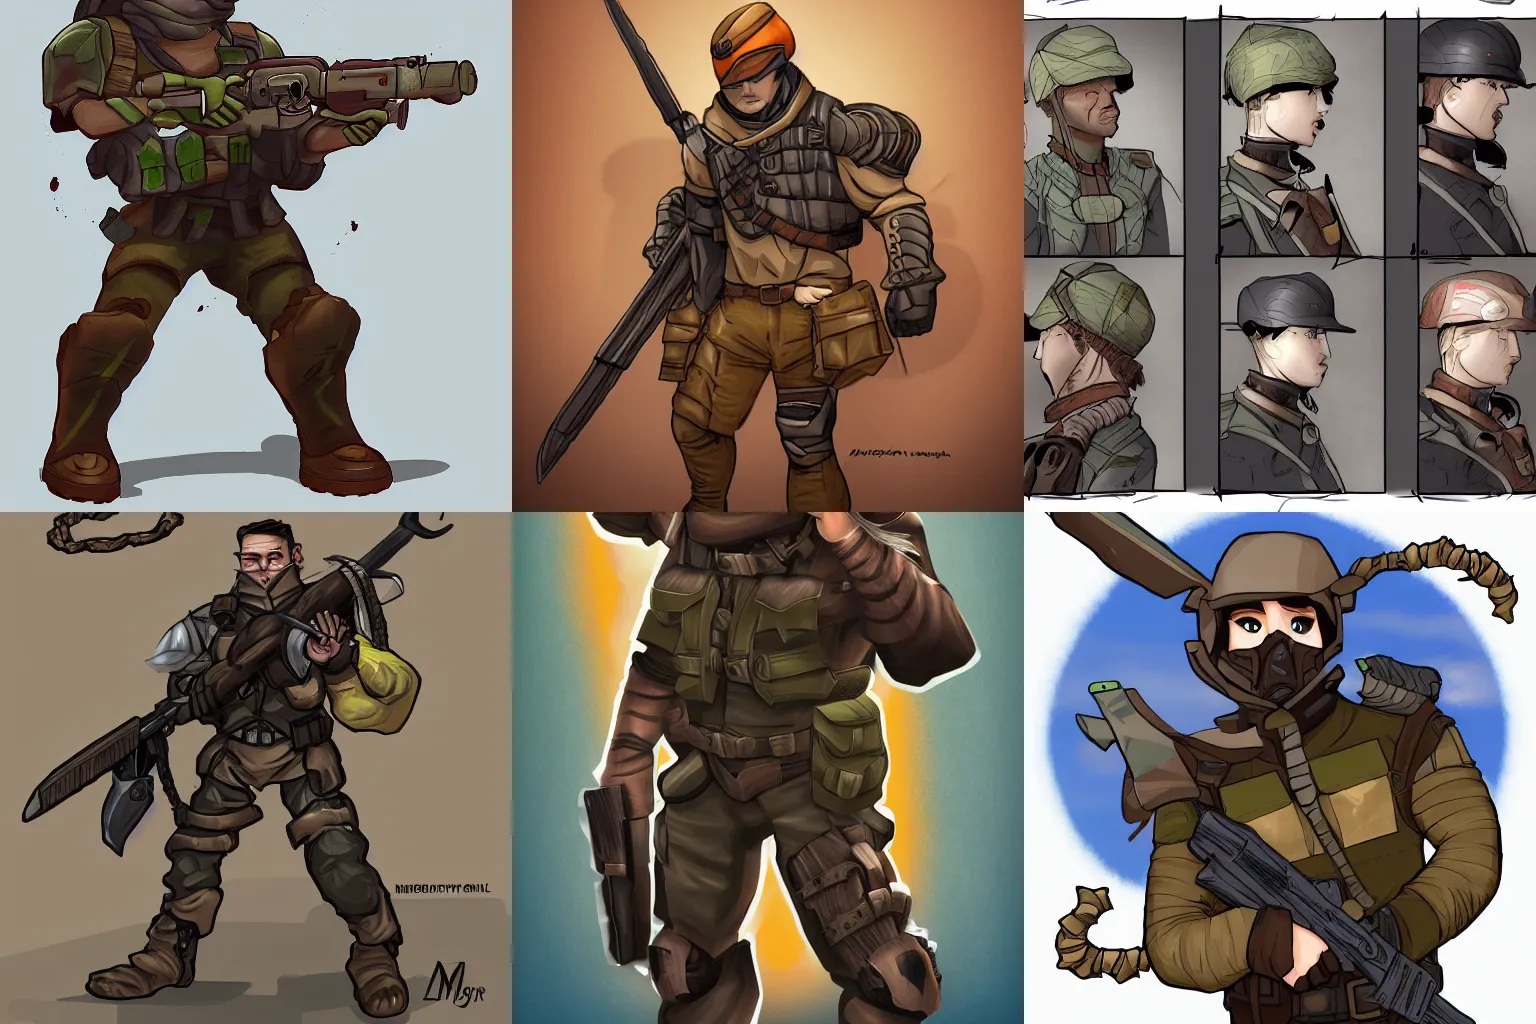 Prompt: ranger mercenary, by mosqi